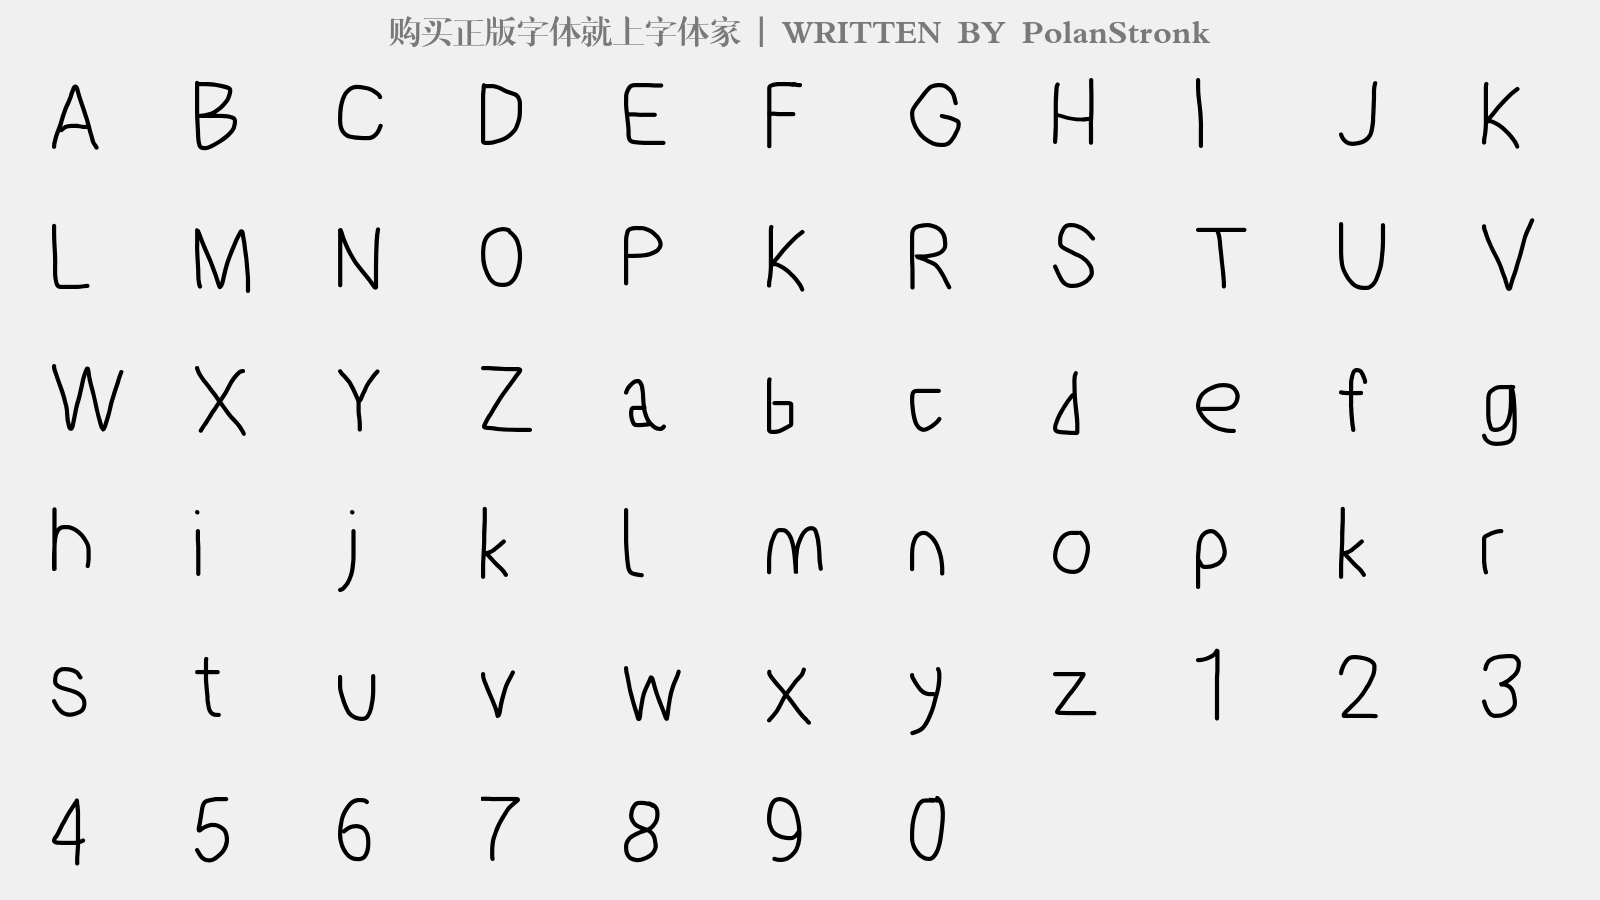 PolanStronk - 大写字母/小写字母/数字